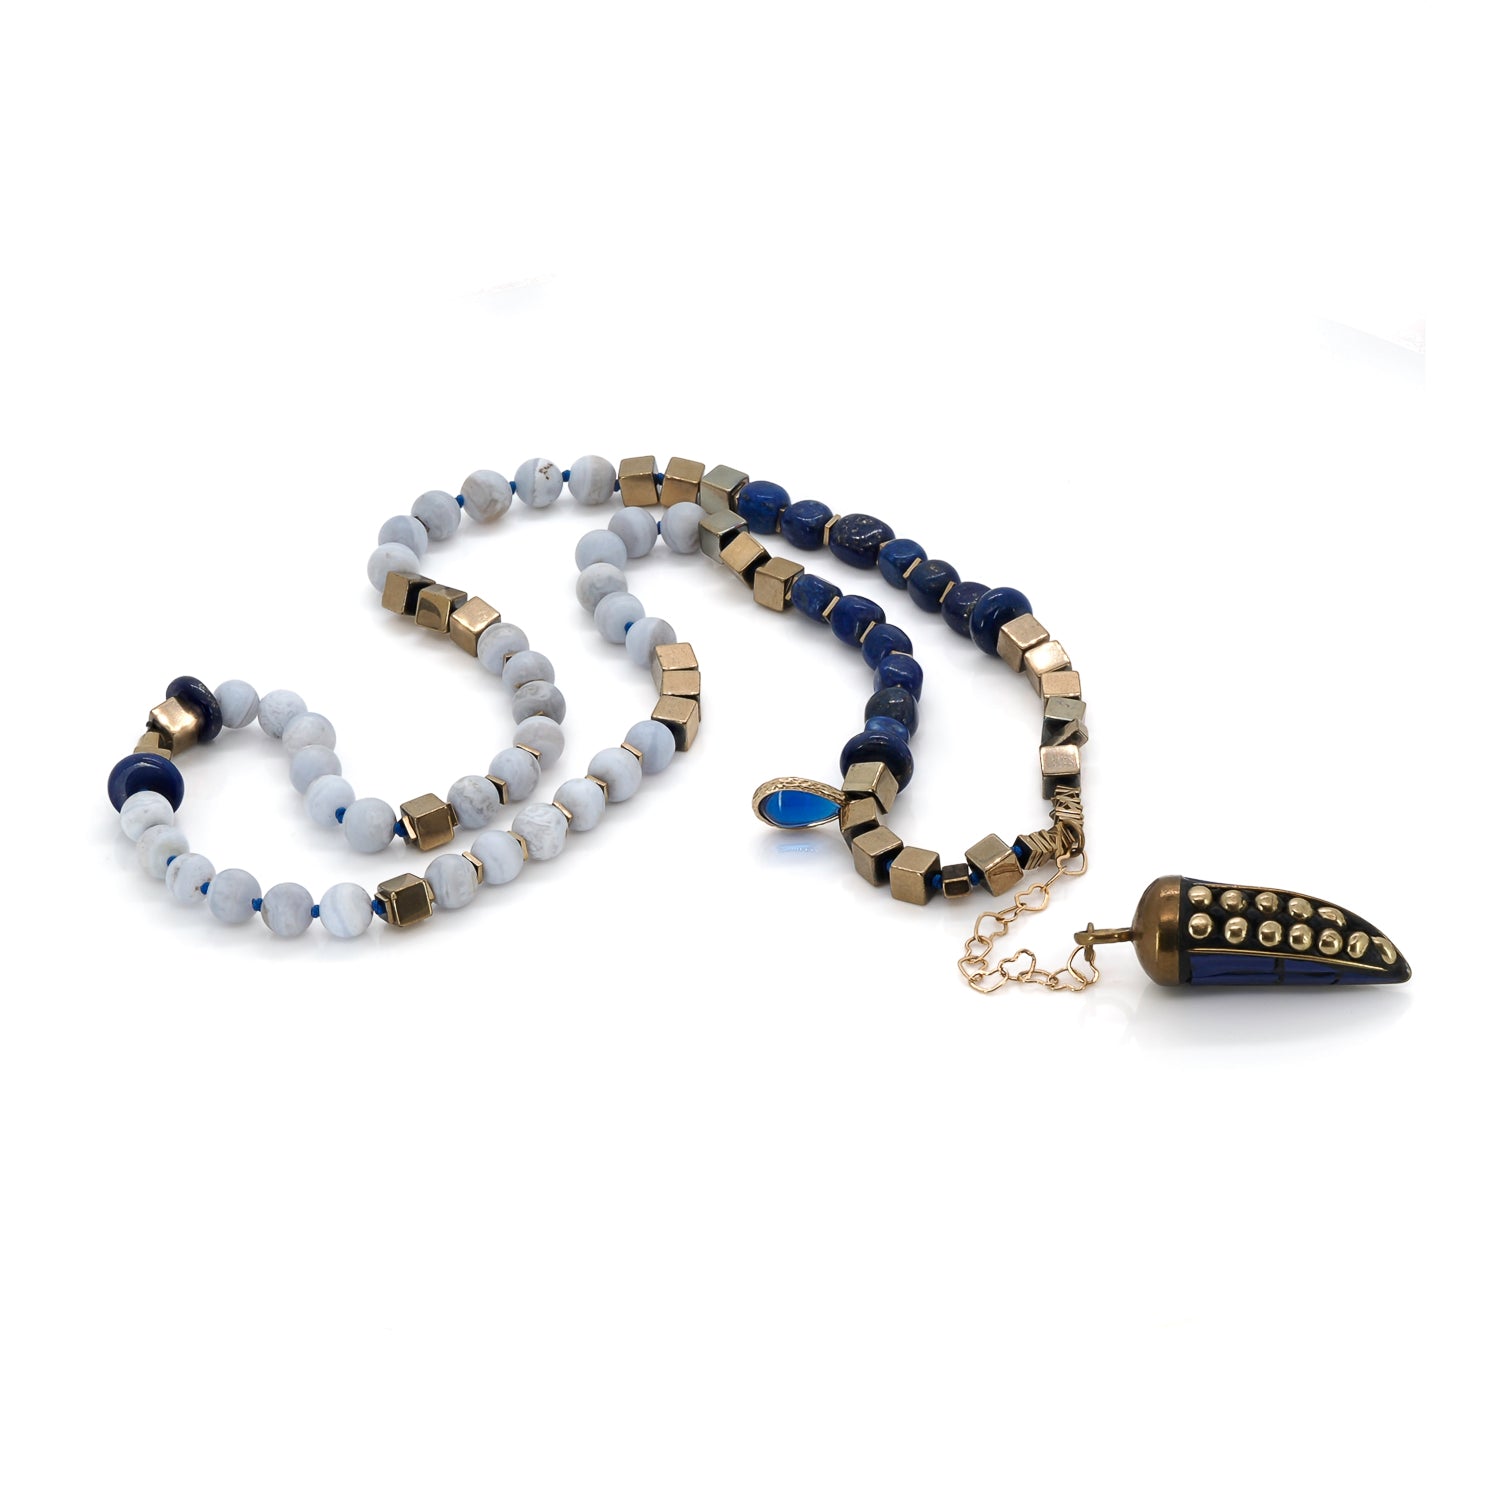 Handcrafted Lapis Lazuli Stone Necklace